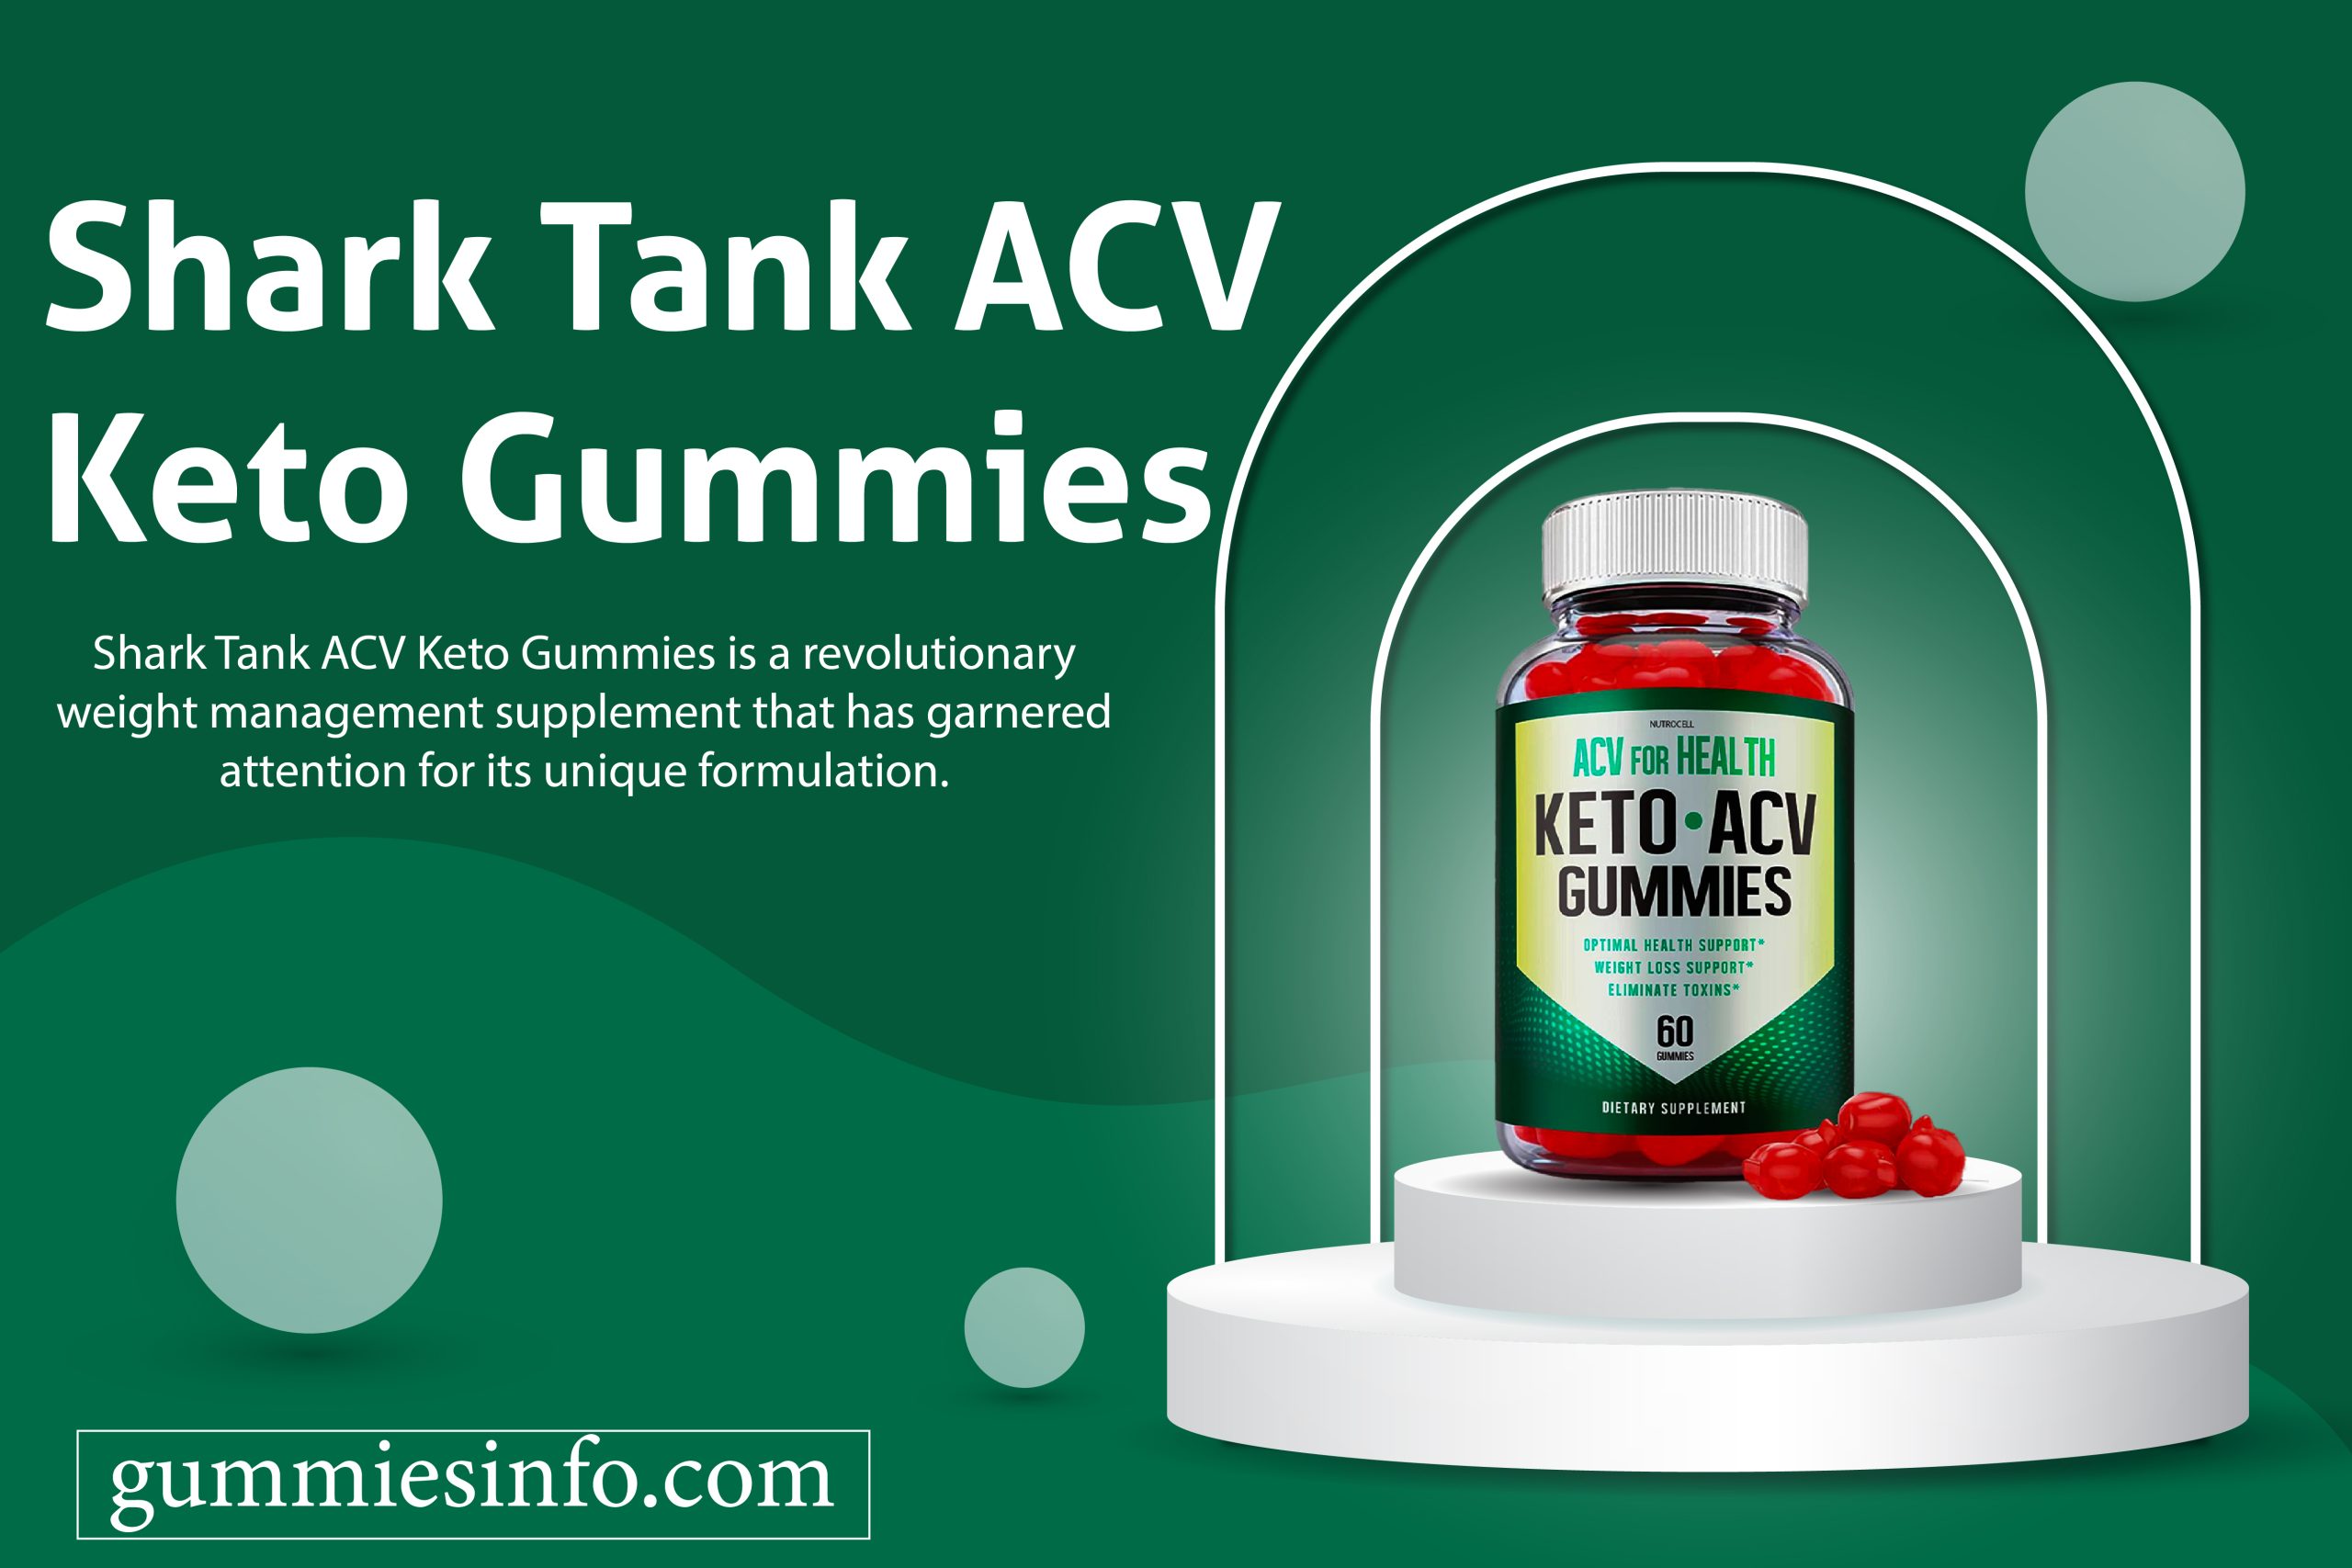 Shark Tank ACV Keto Gummies